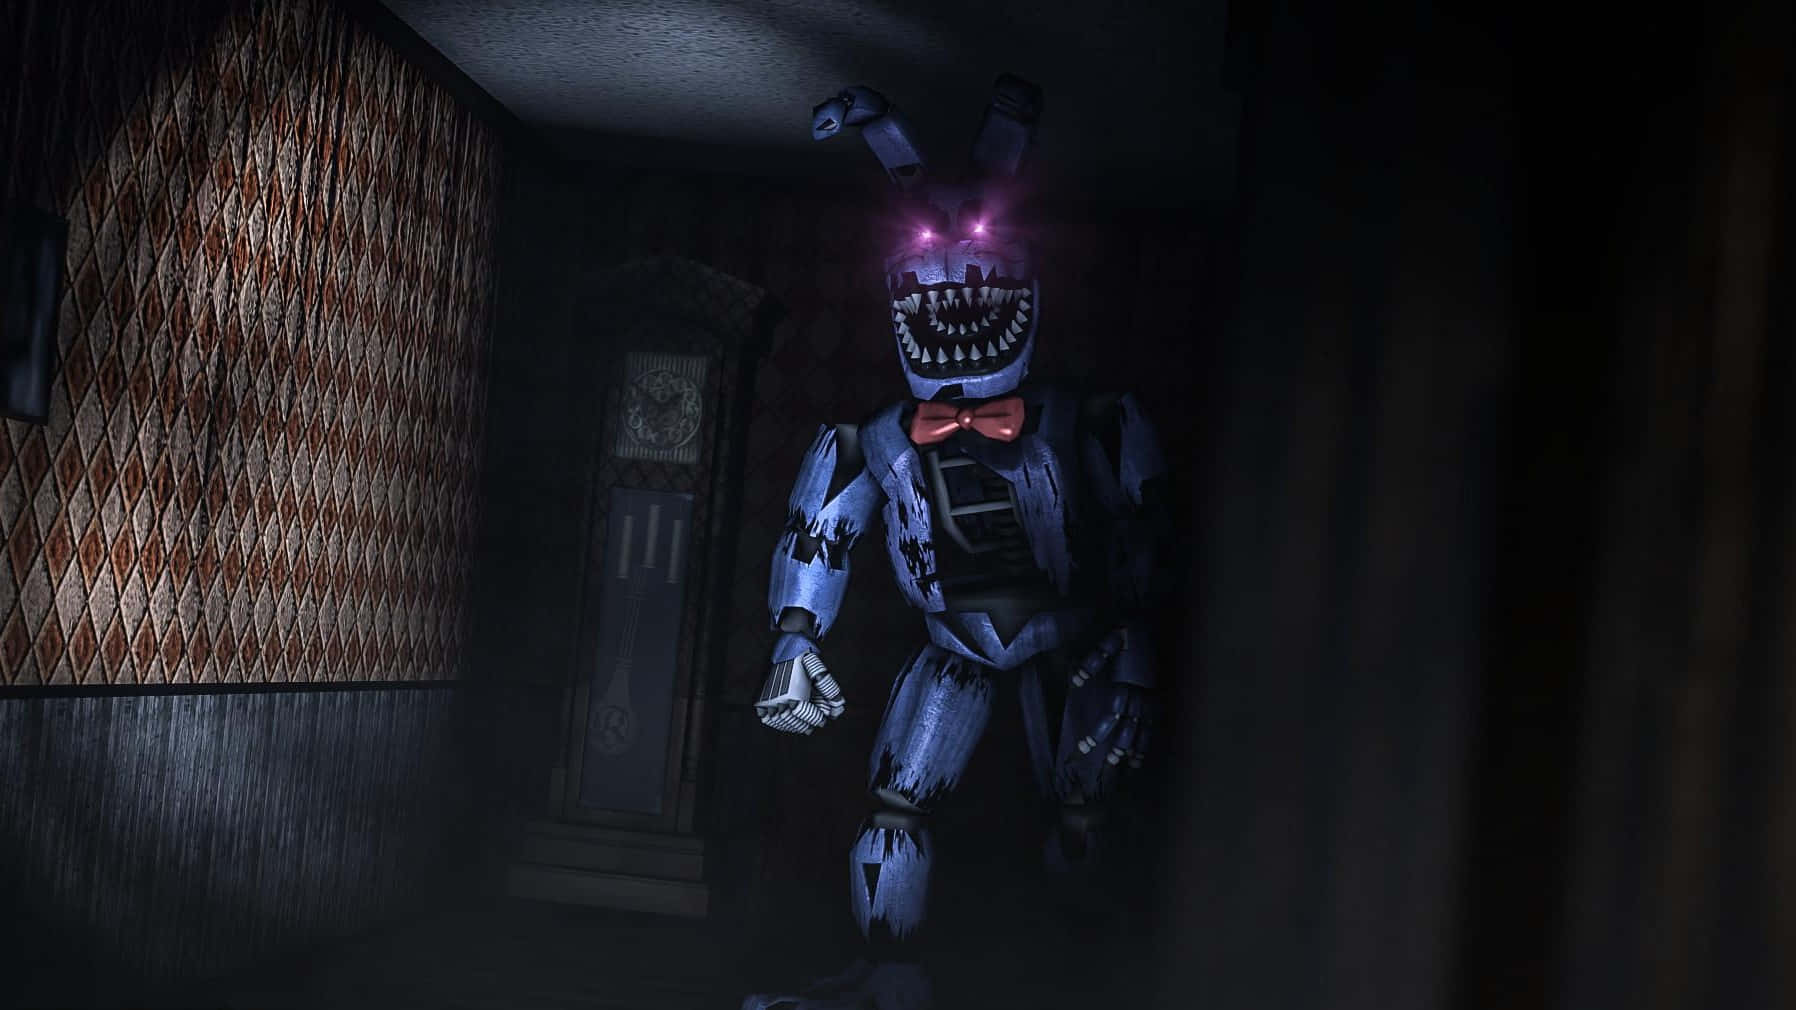 5 Nights at Freddy's 4: The Terror Awakens Wallpaper